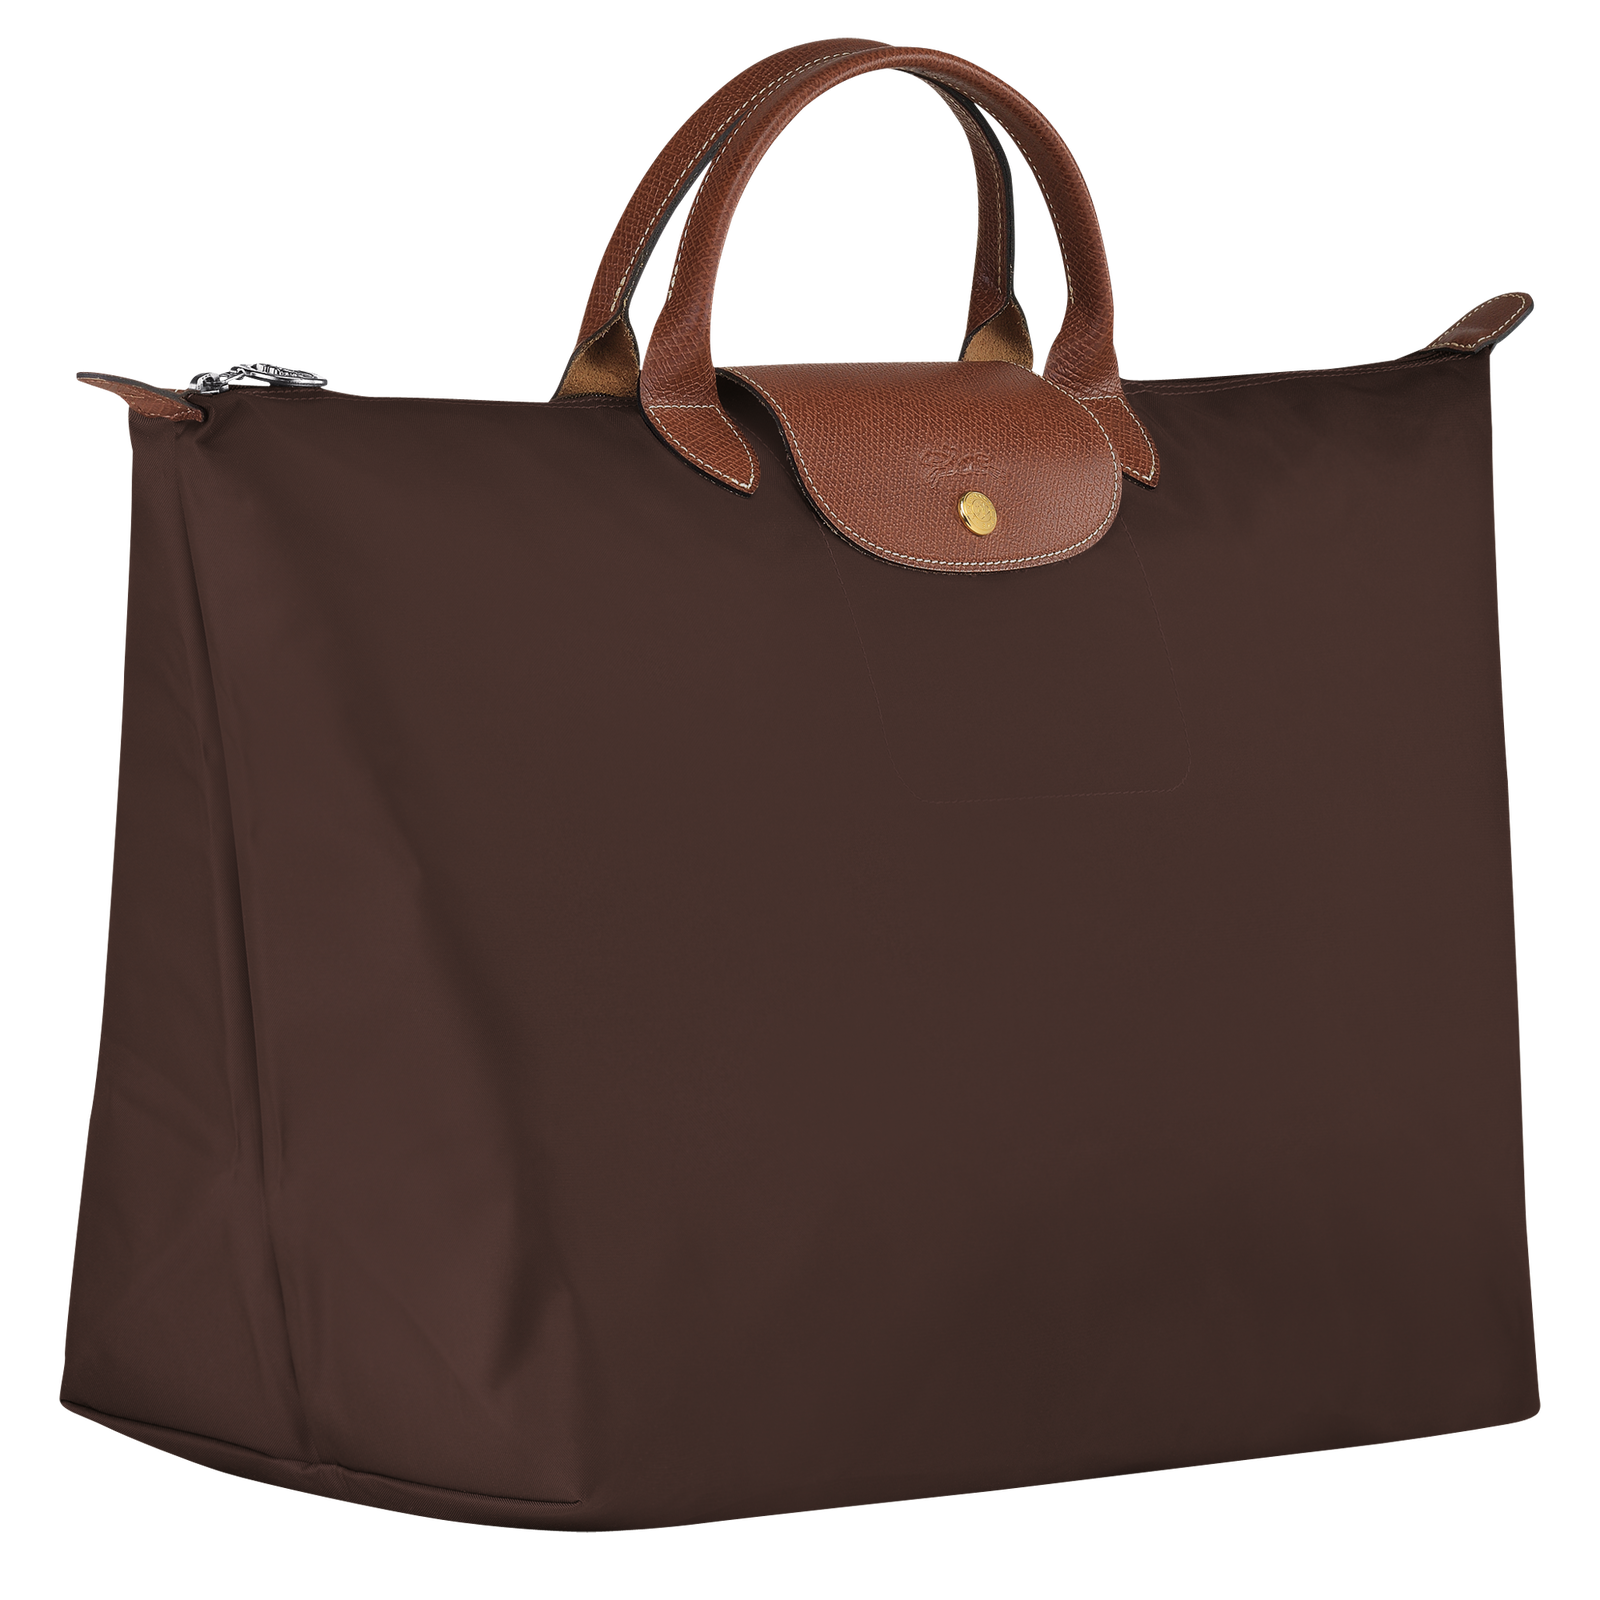 Le Pliage Original Travel bag S, Ebony